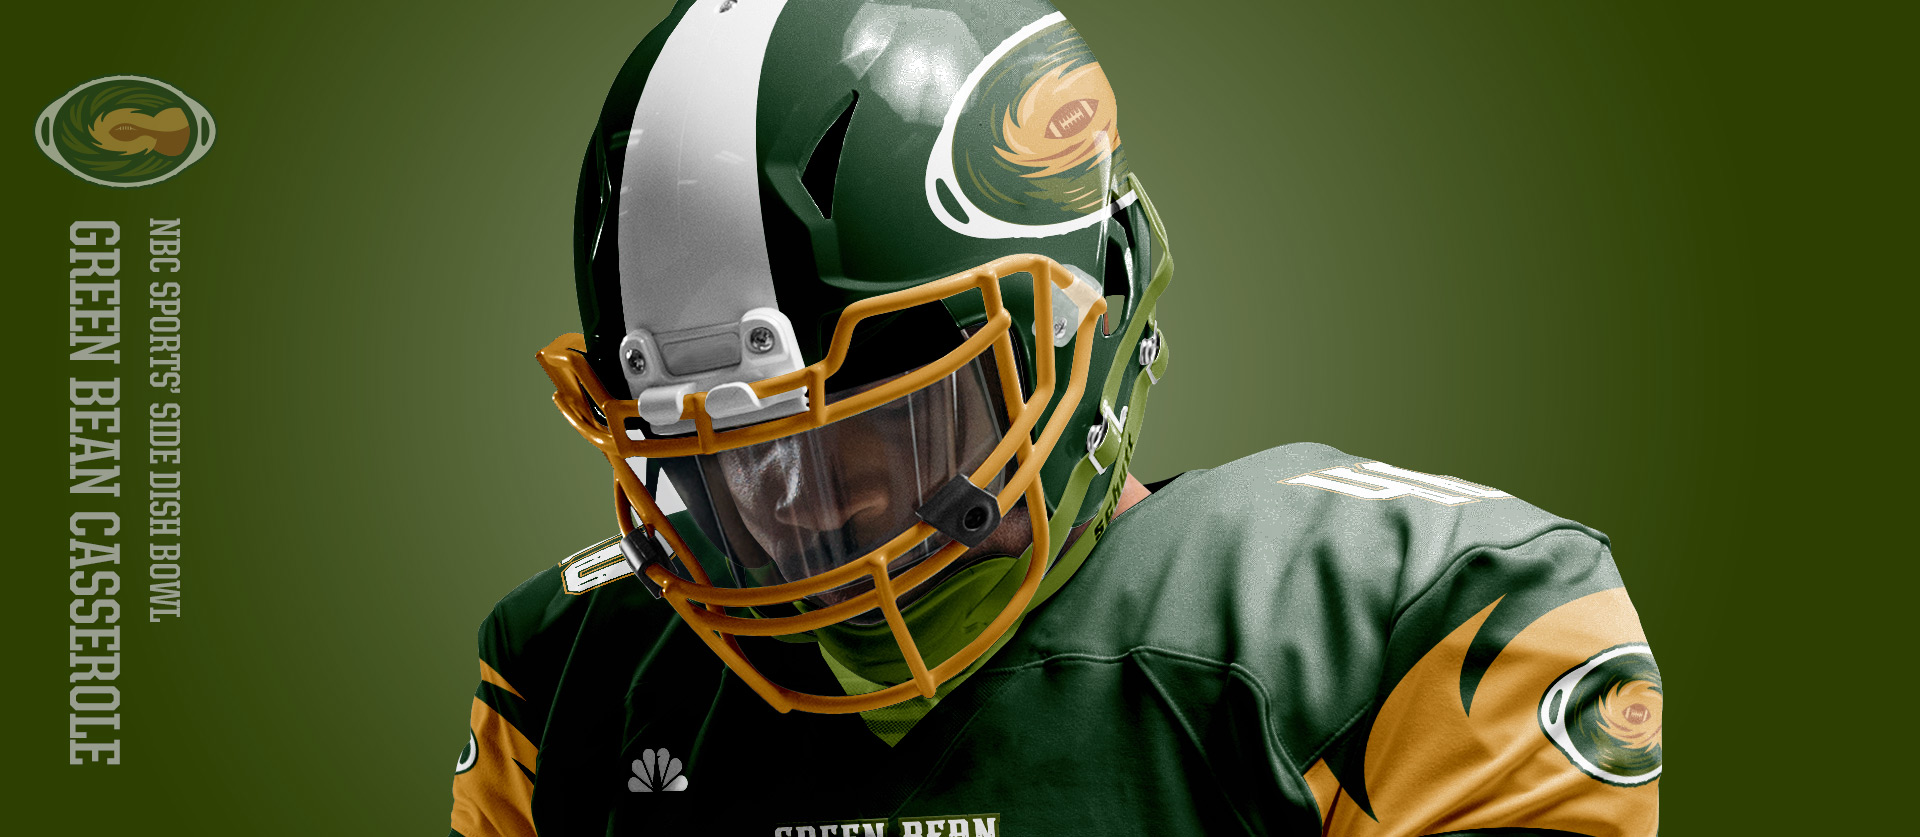 Green Bean Casseroles Helment - Football Uniform Design for NBC Sports Thanksgiving Side Dish Bowl